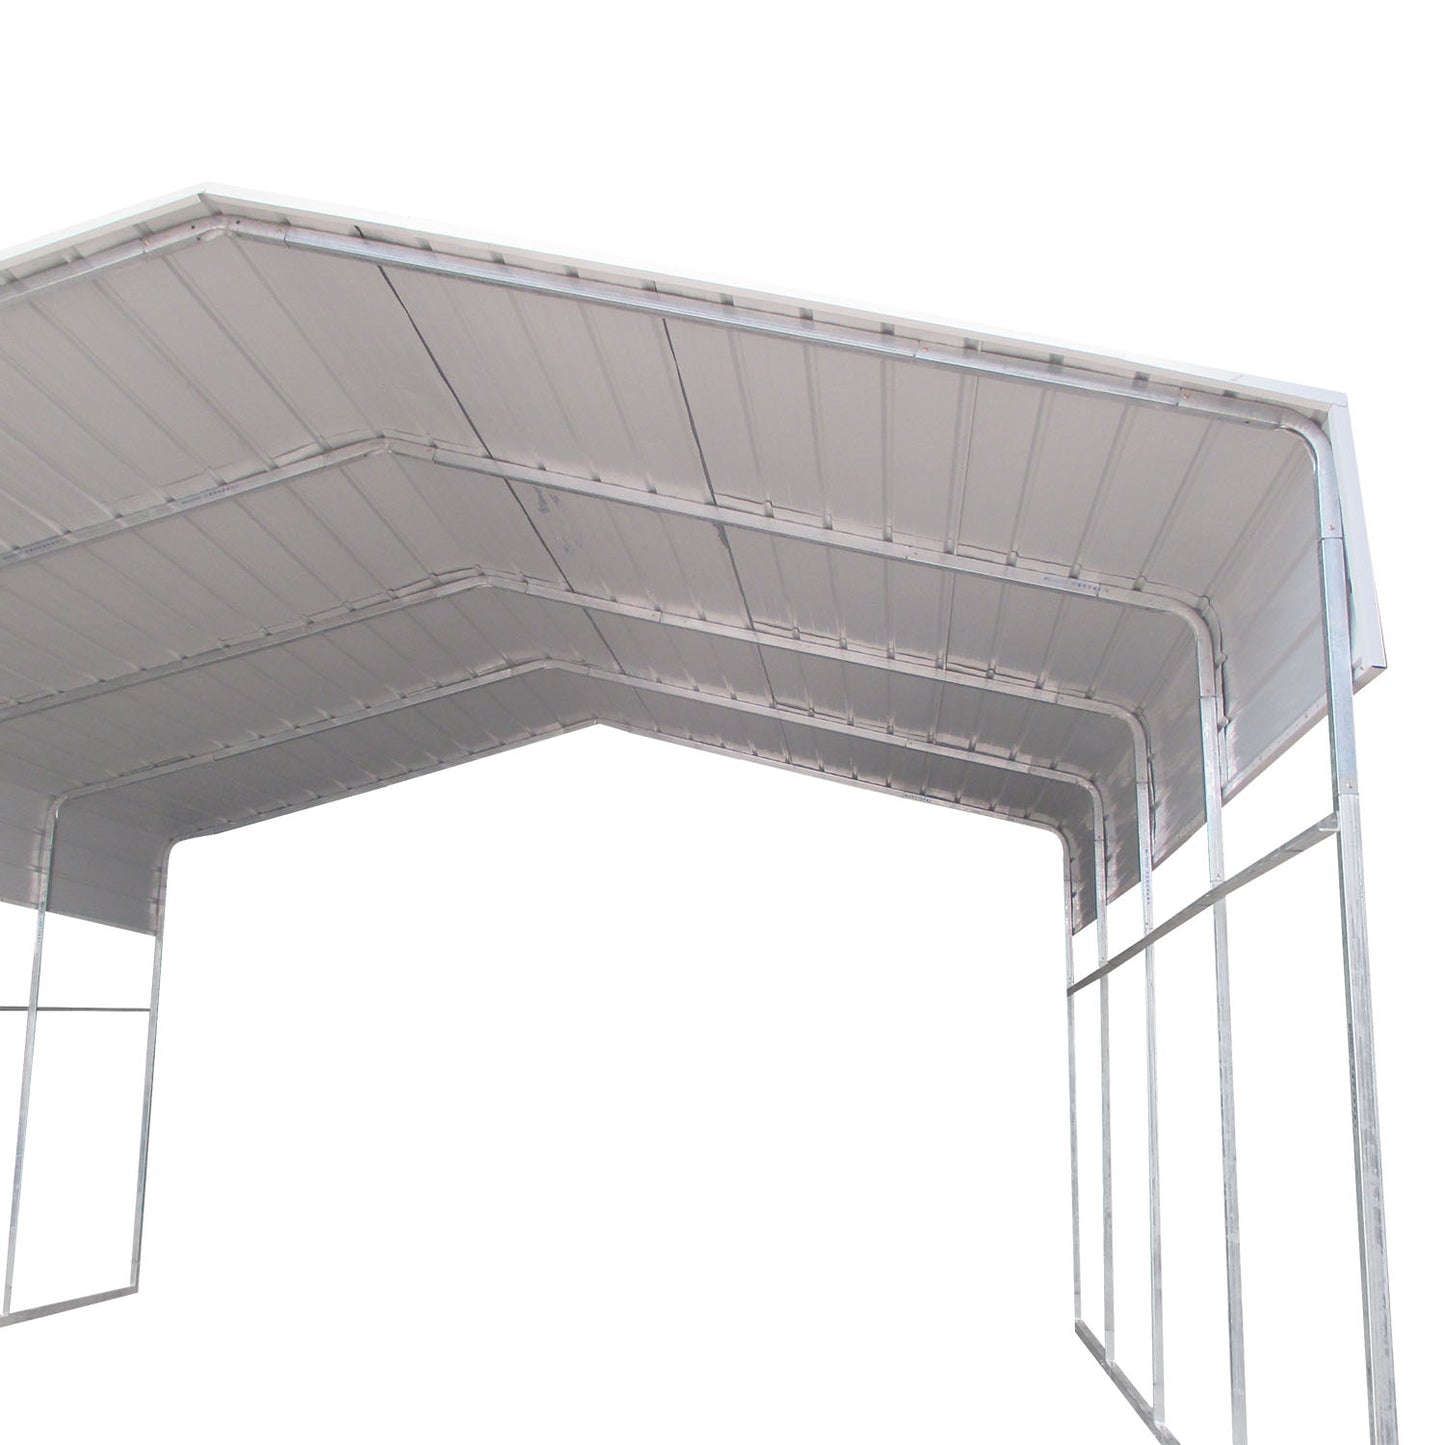 Metal Steel Carport 3.3x6m Cream